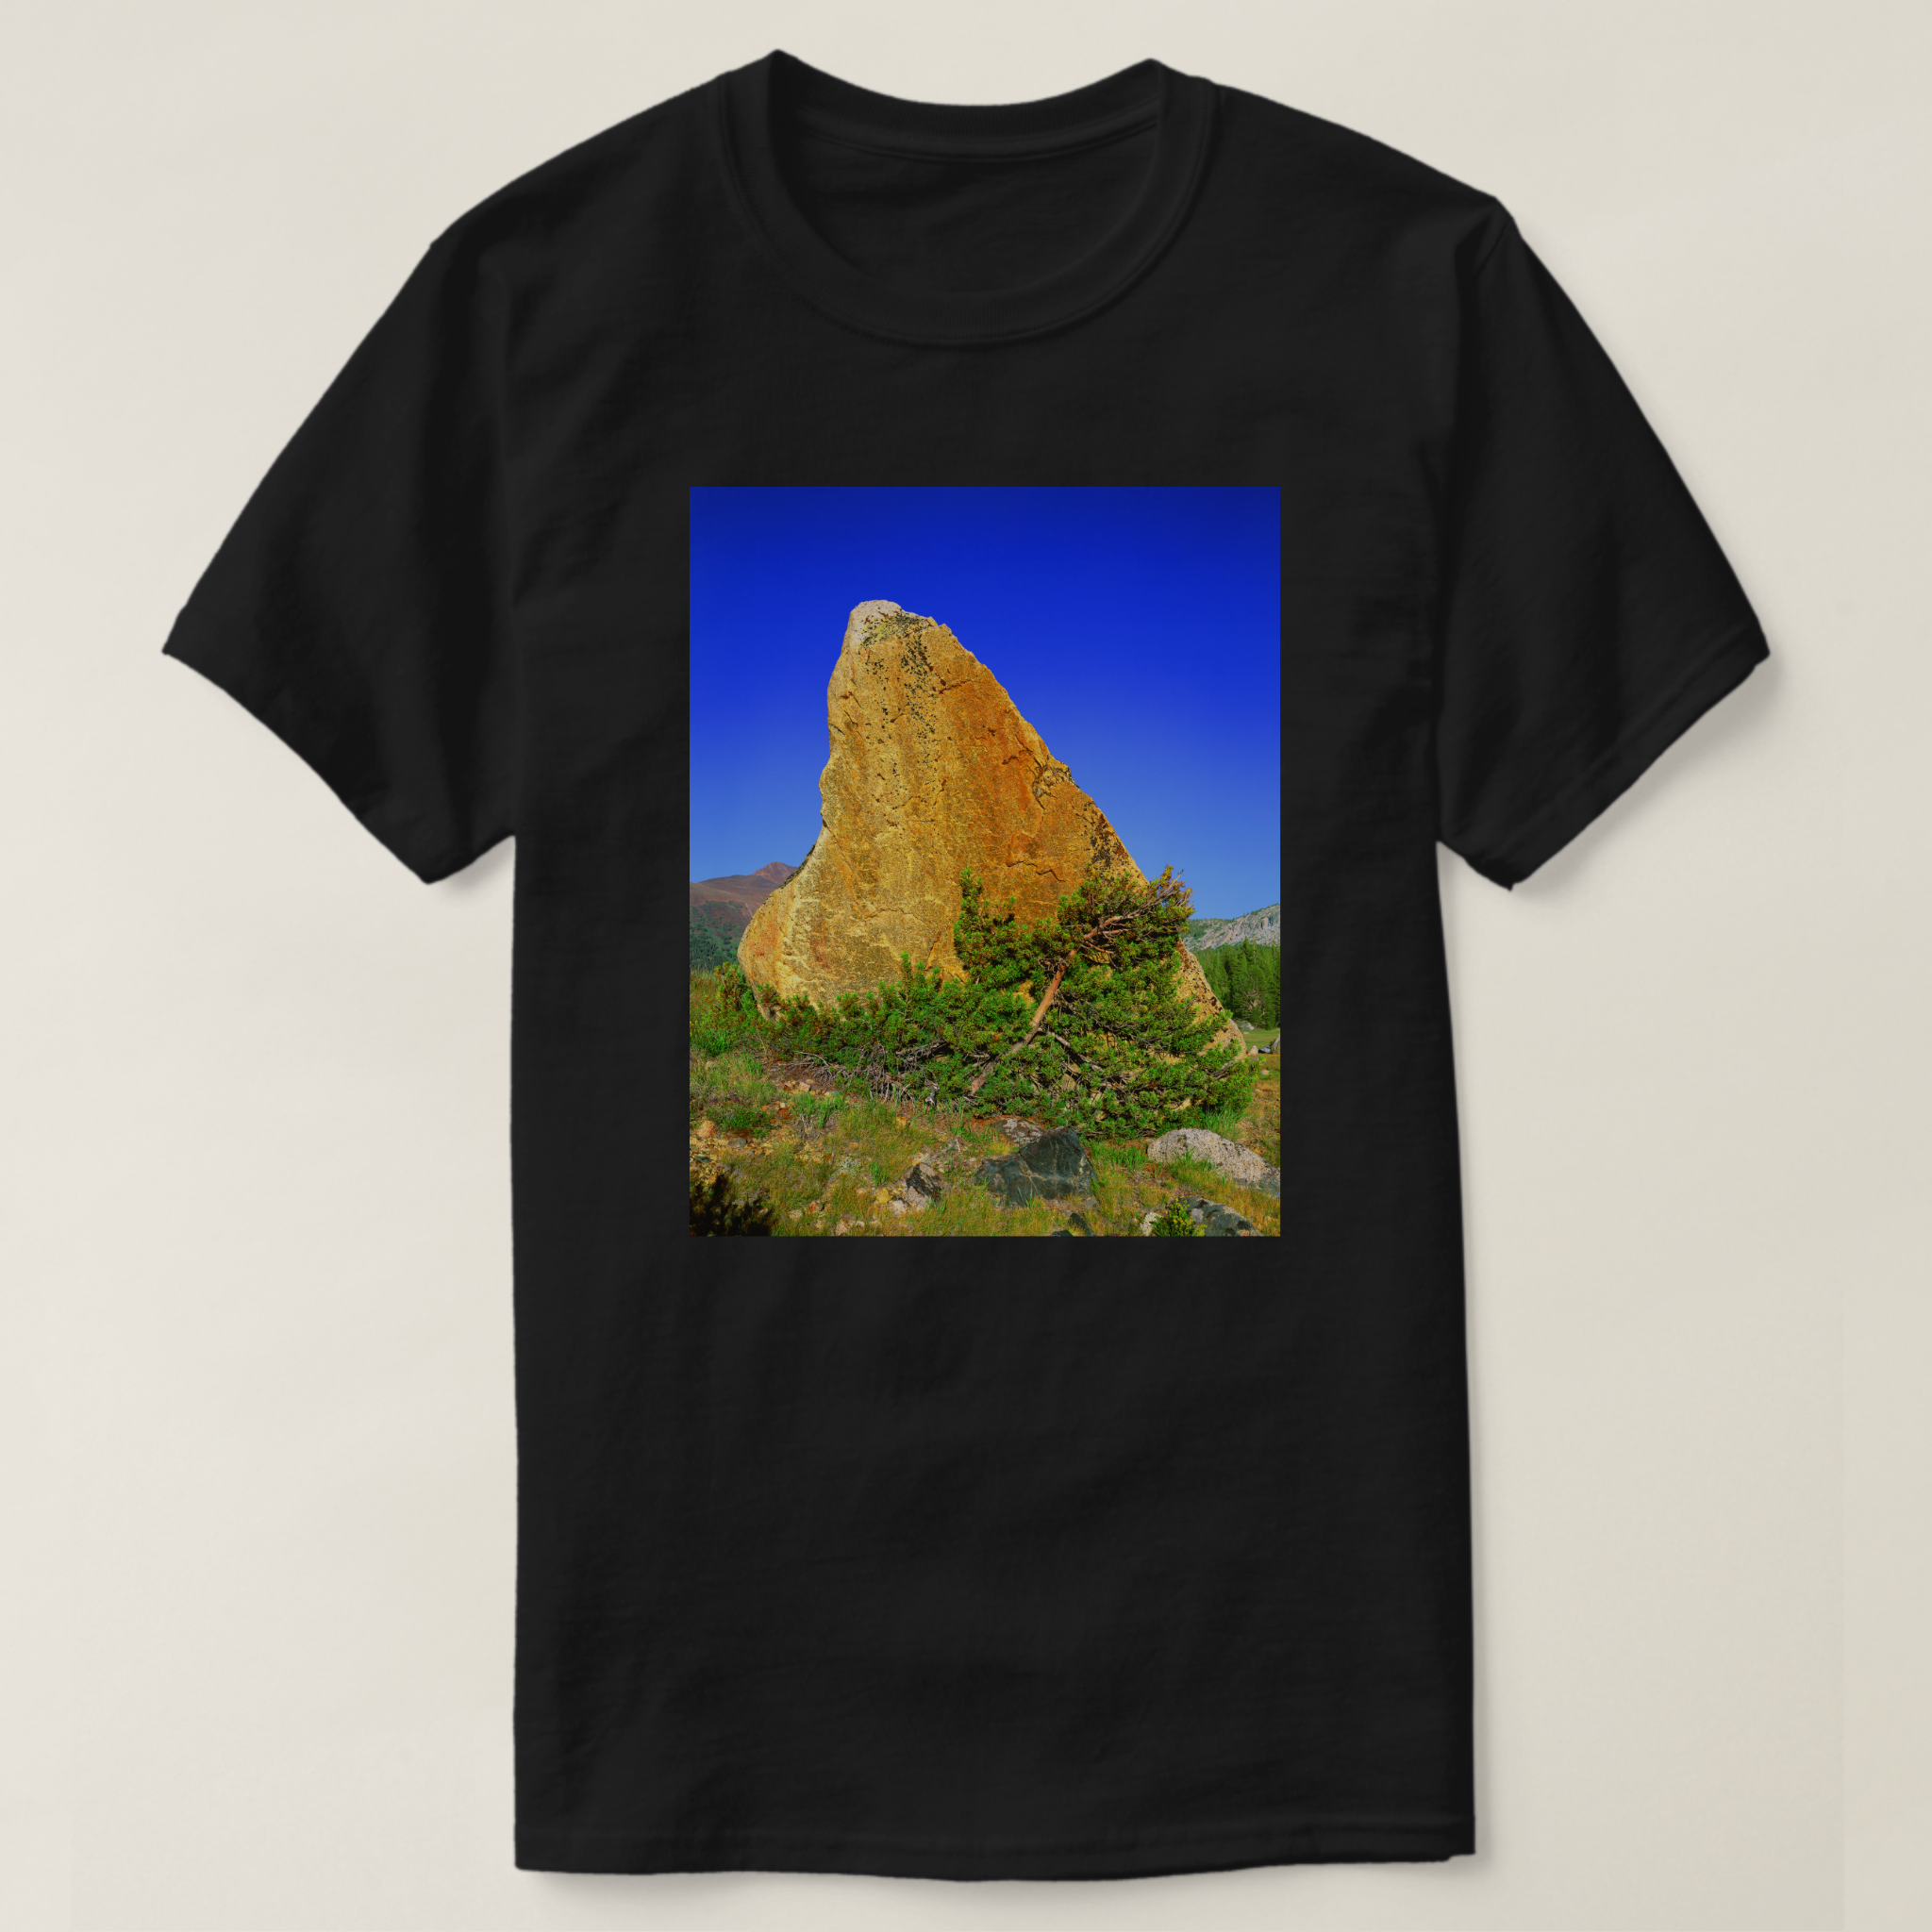 Zazzle - Mockup - Sierra Nature %22Golden Rock%22 T-Shirt.png